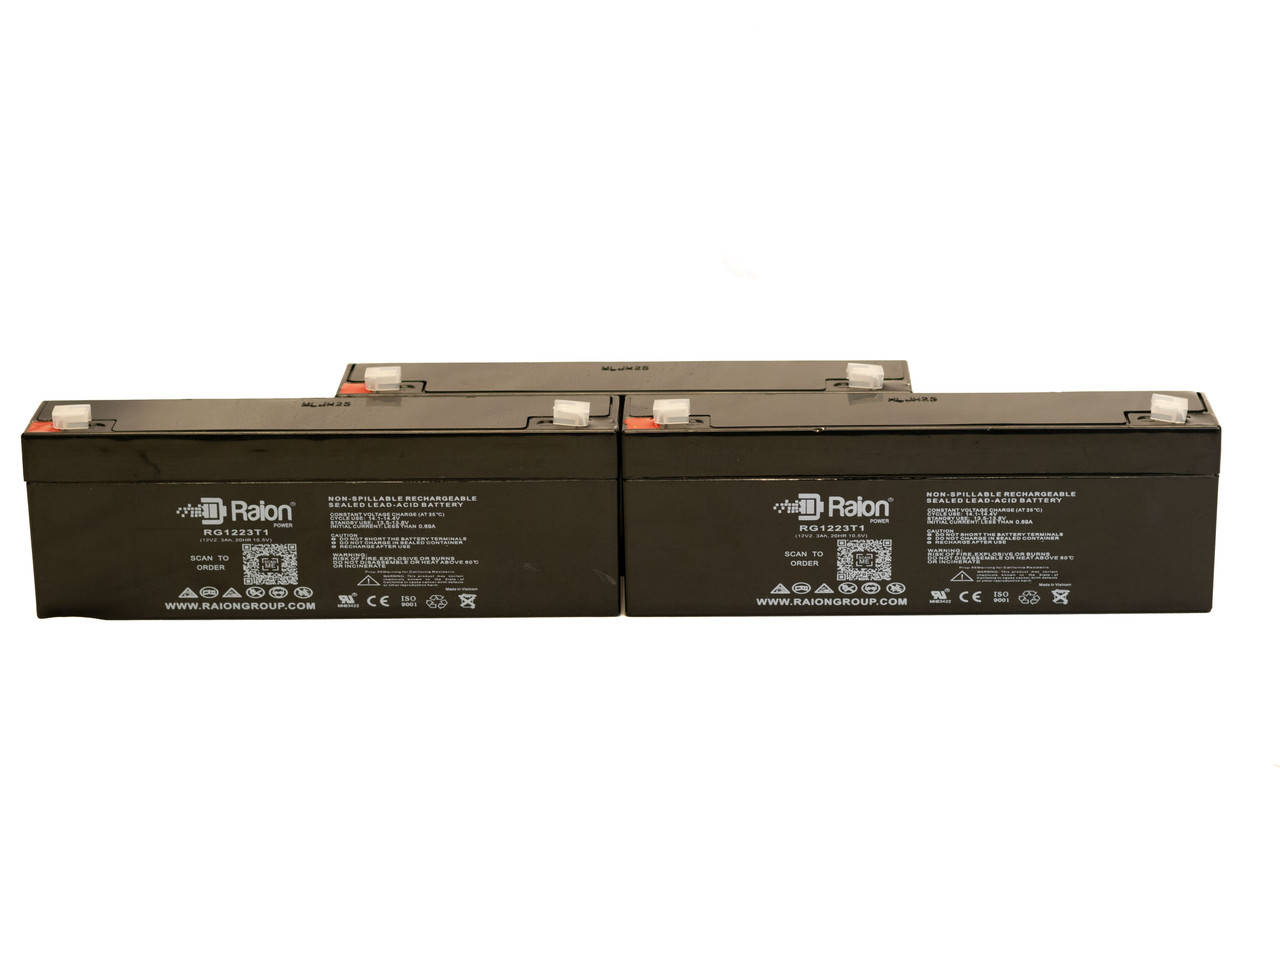 Raion Power 12V 2.3Ah RG1223T1 Replacement Medical Battery for Corometrics Medical System NIBP 555 - 3 Pack